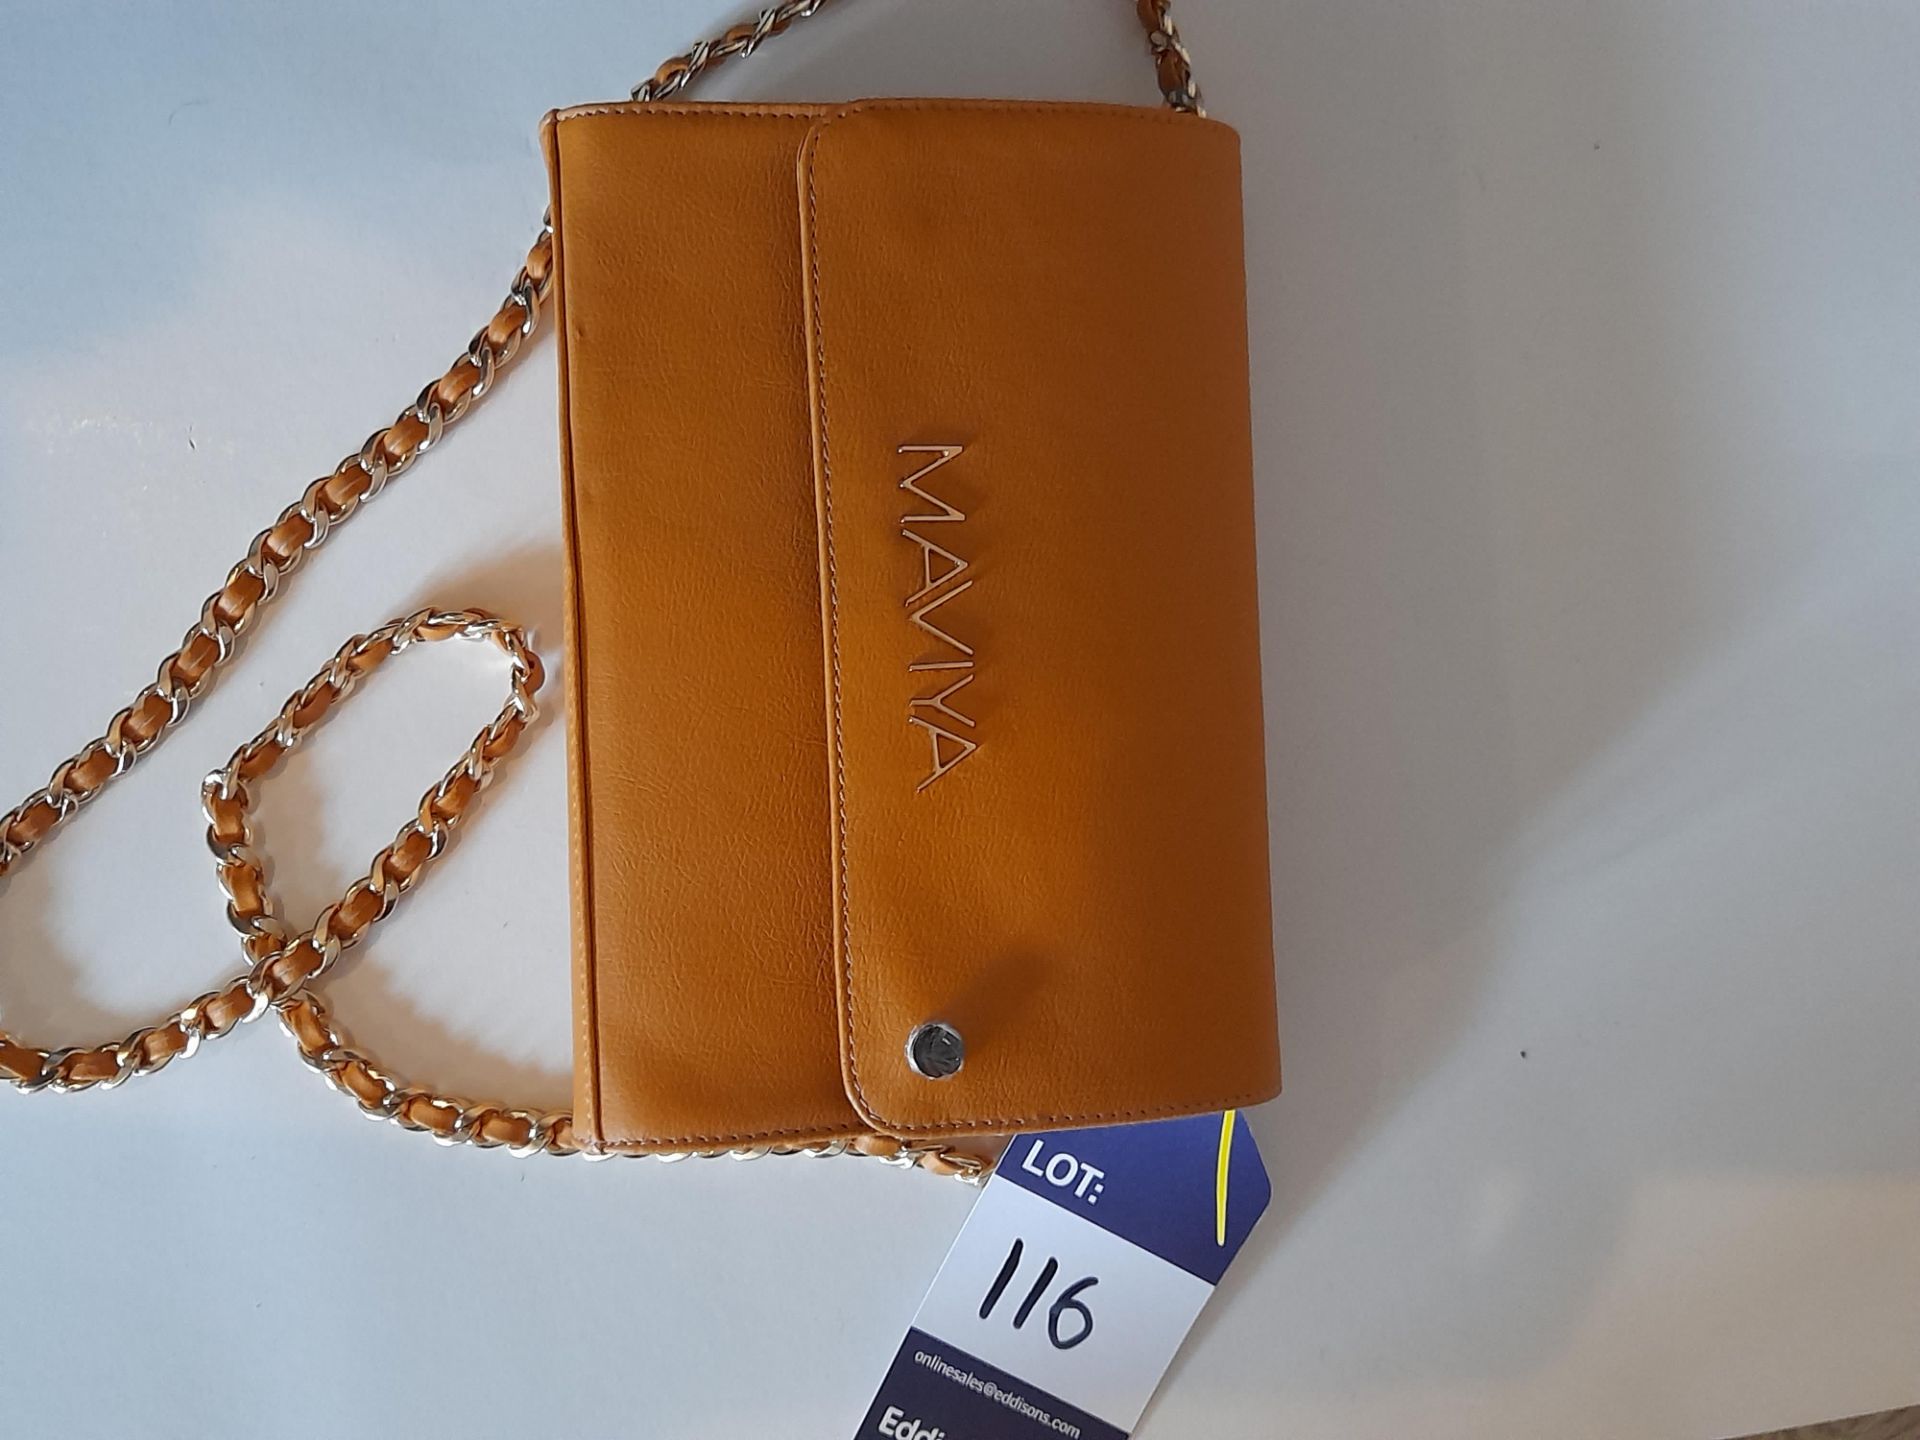 Maviya “Zenn” Orange Vegan Italian Leather Cross Body Bag with Smooth Soft Finish, Faux Suede Lining